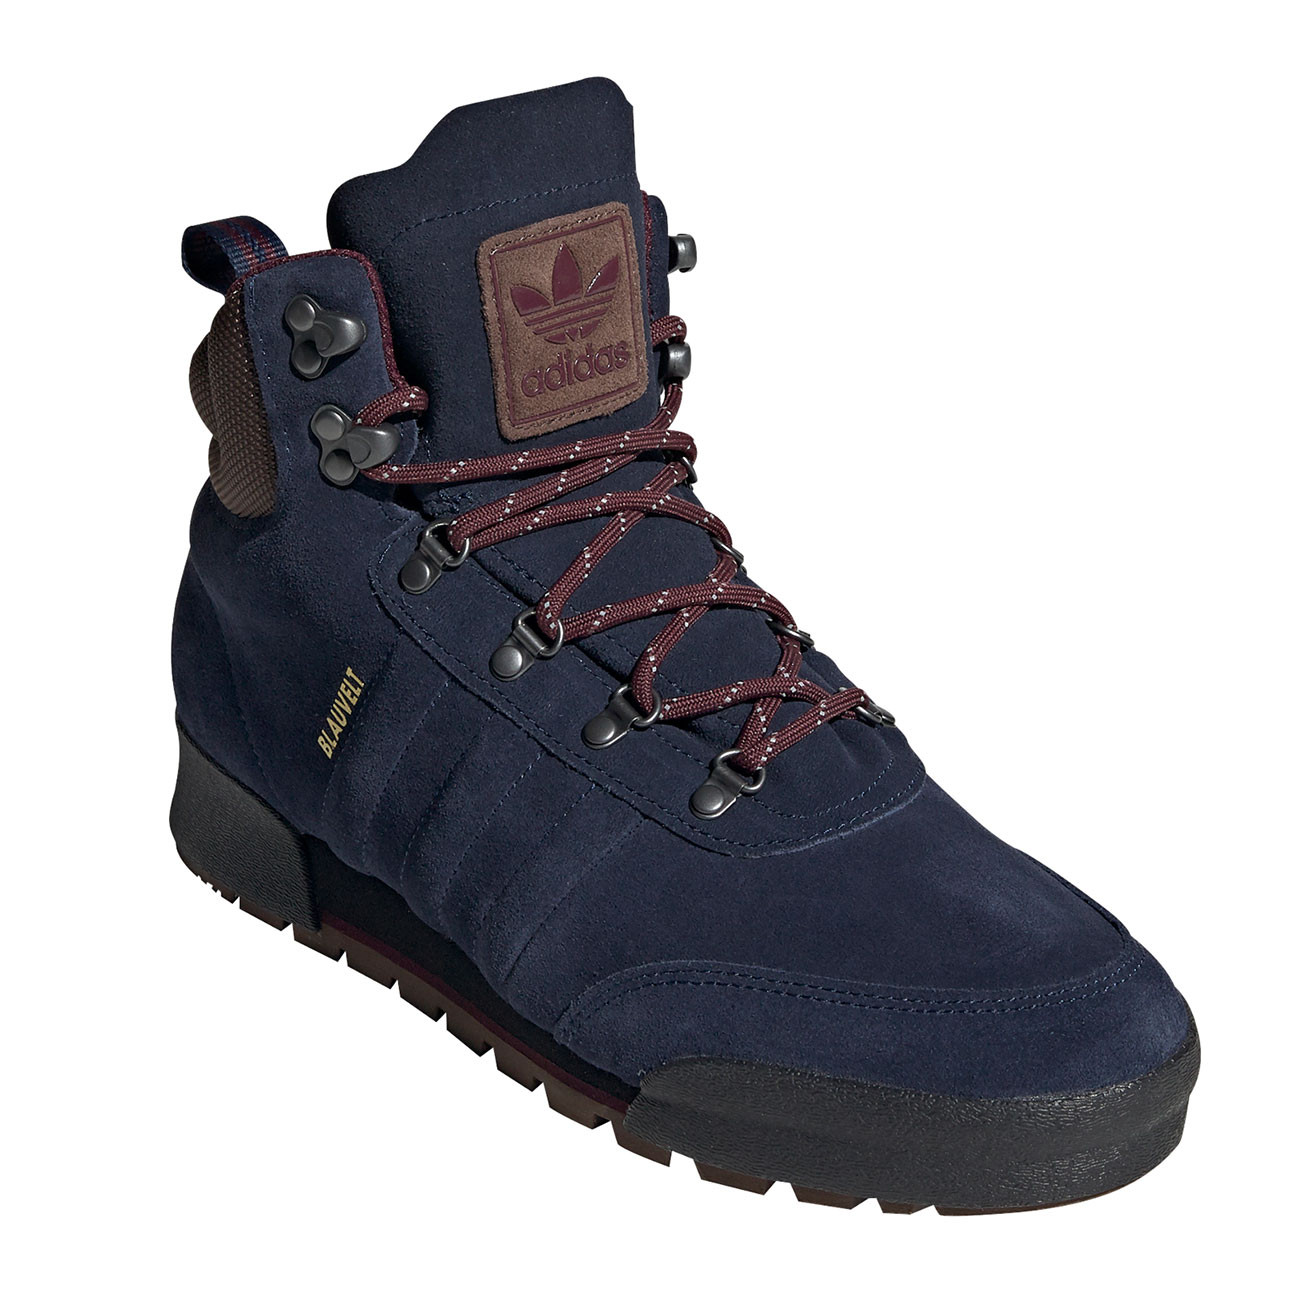 Winter shoes Adidas Jake Boot 2.0 collegiate navy/maroon/brown | Snowboard  Zezula